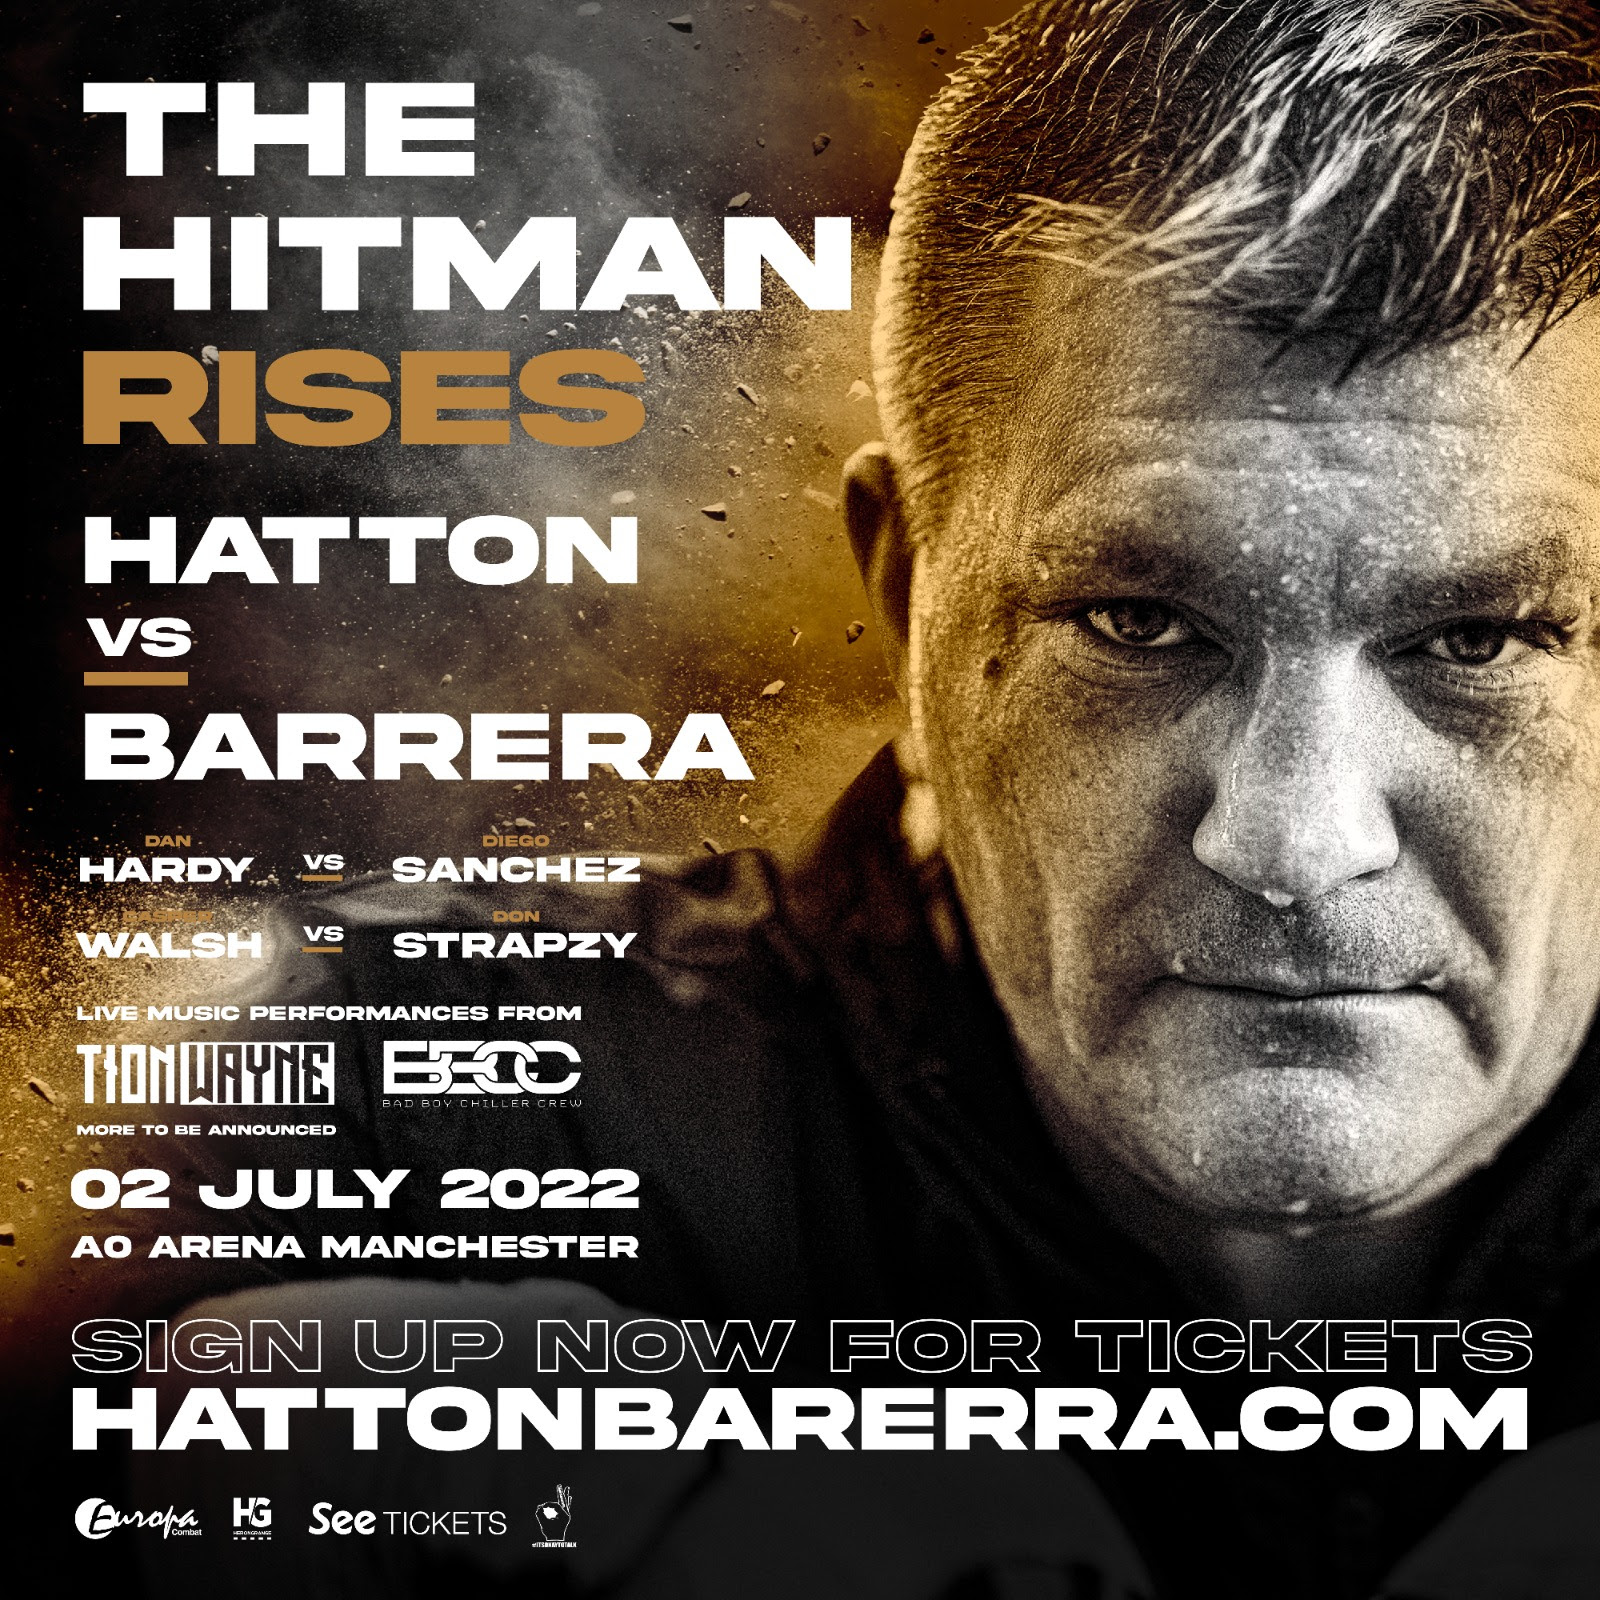 Marco Antonio Barrera, Ricky Hatton boxing image / photo